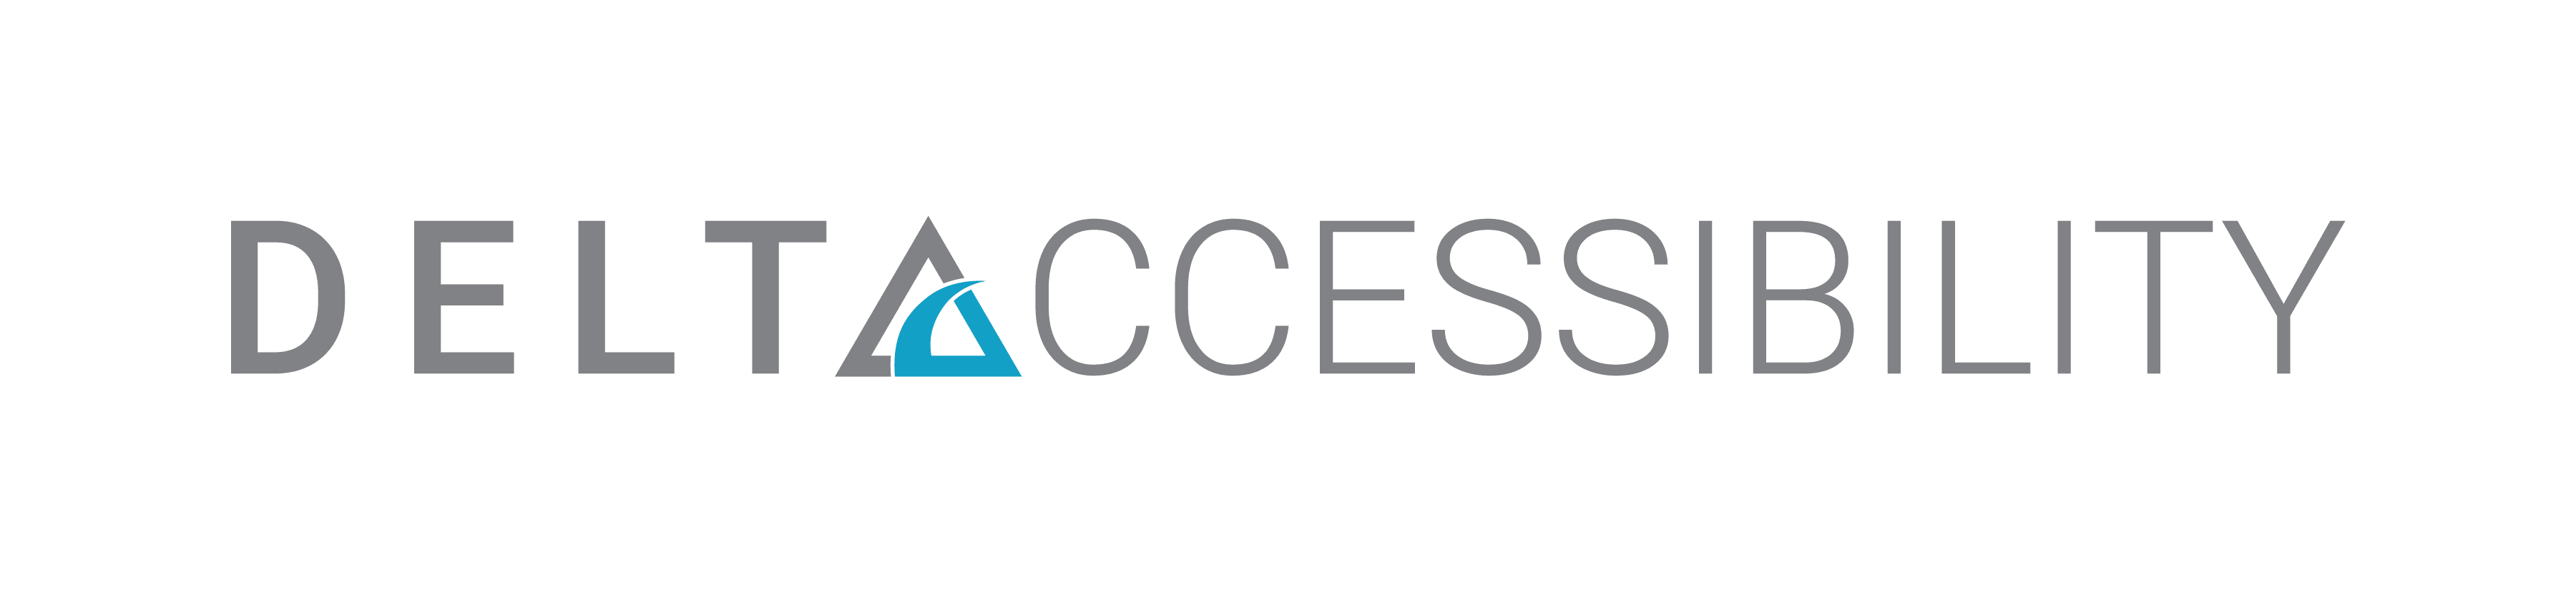 Delta Accessibility